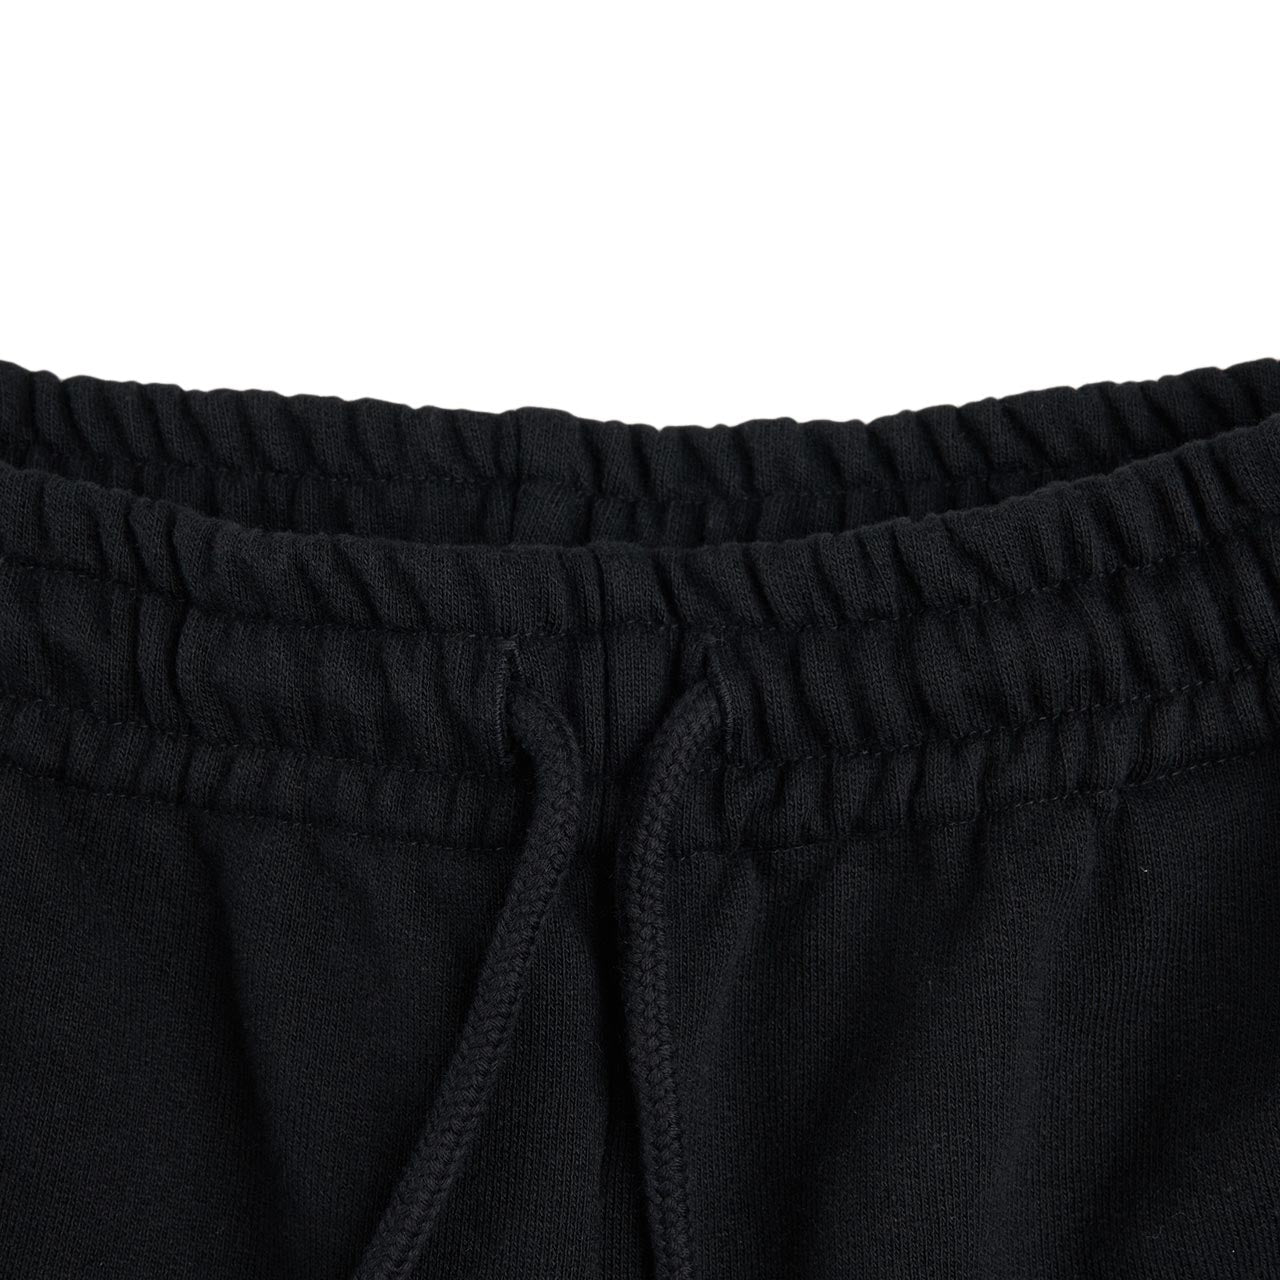 wacko maria washed heavyweight sweatpants type-1 (black)